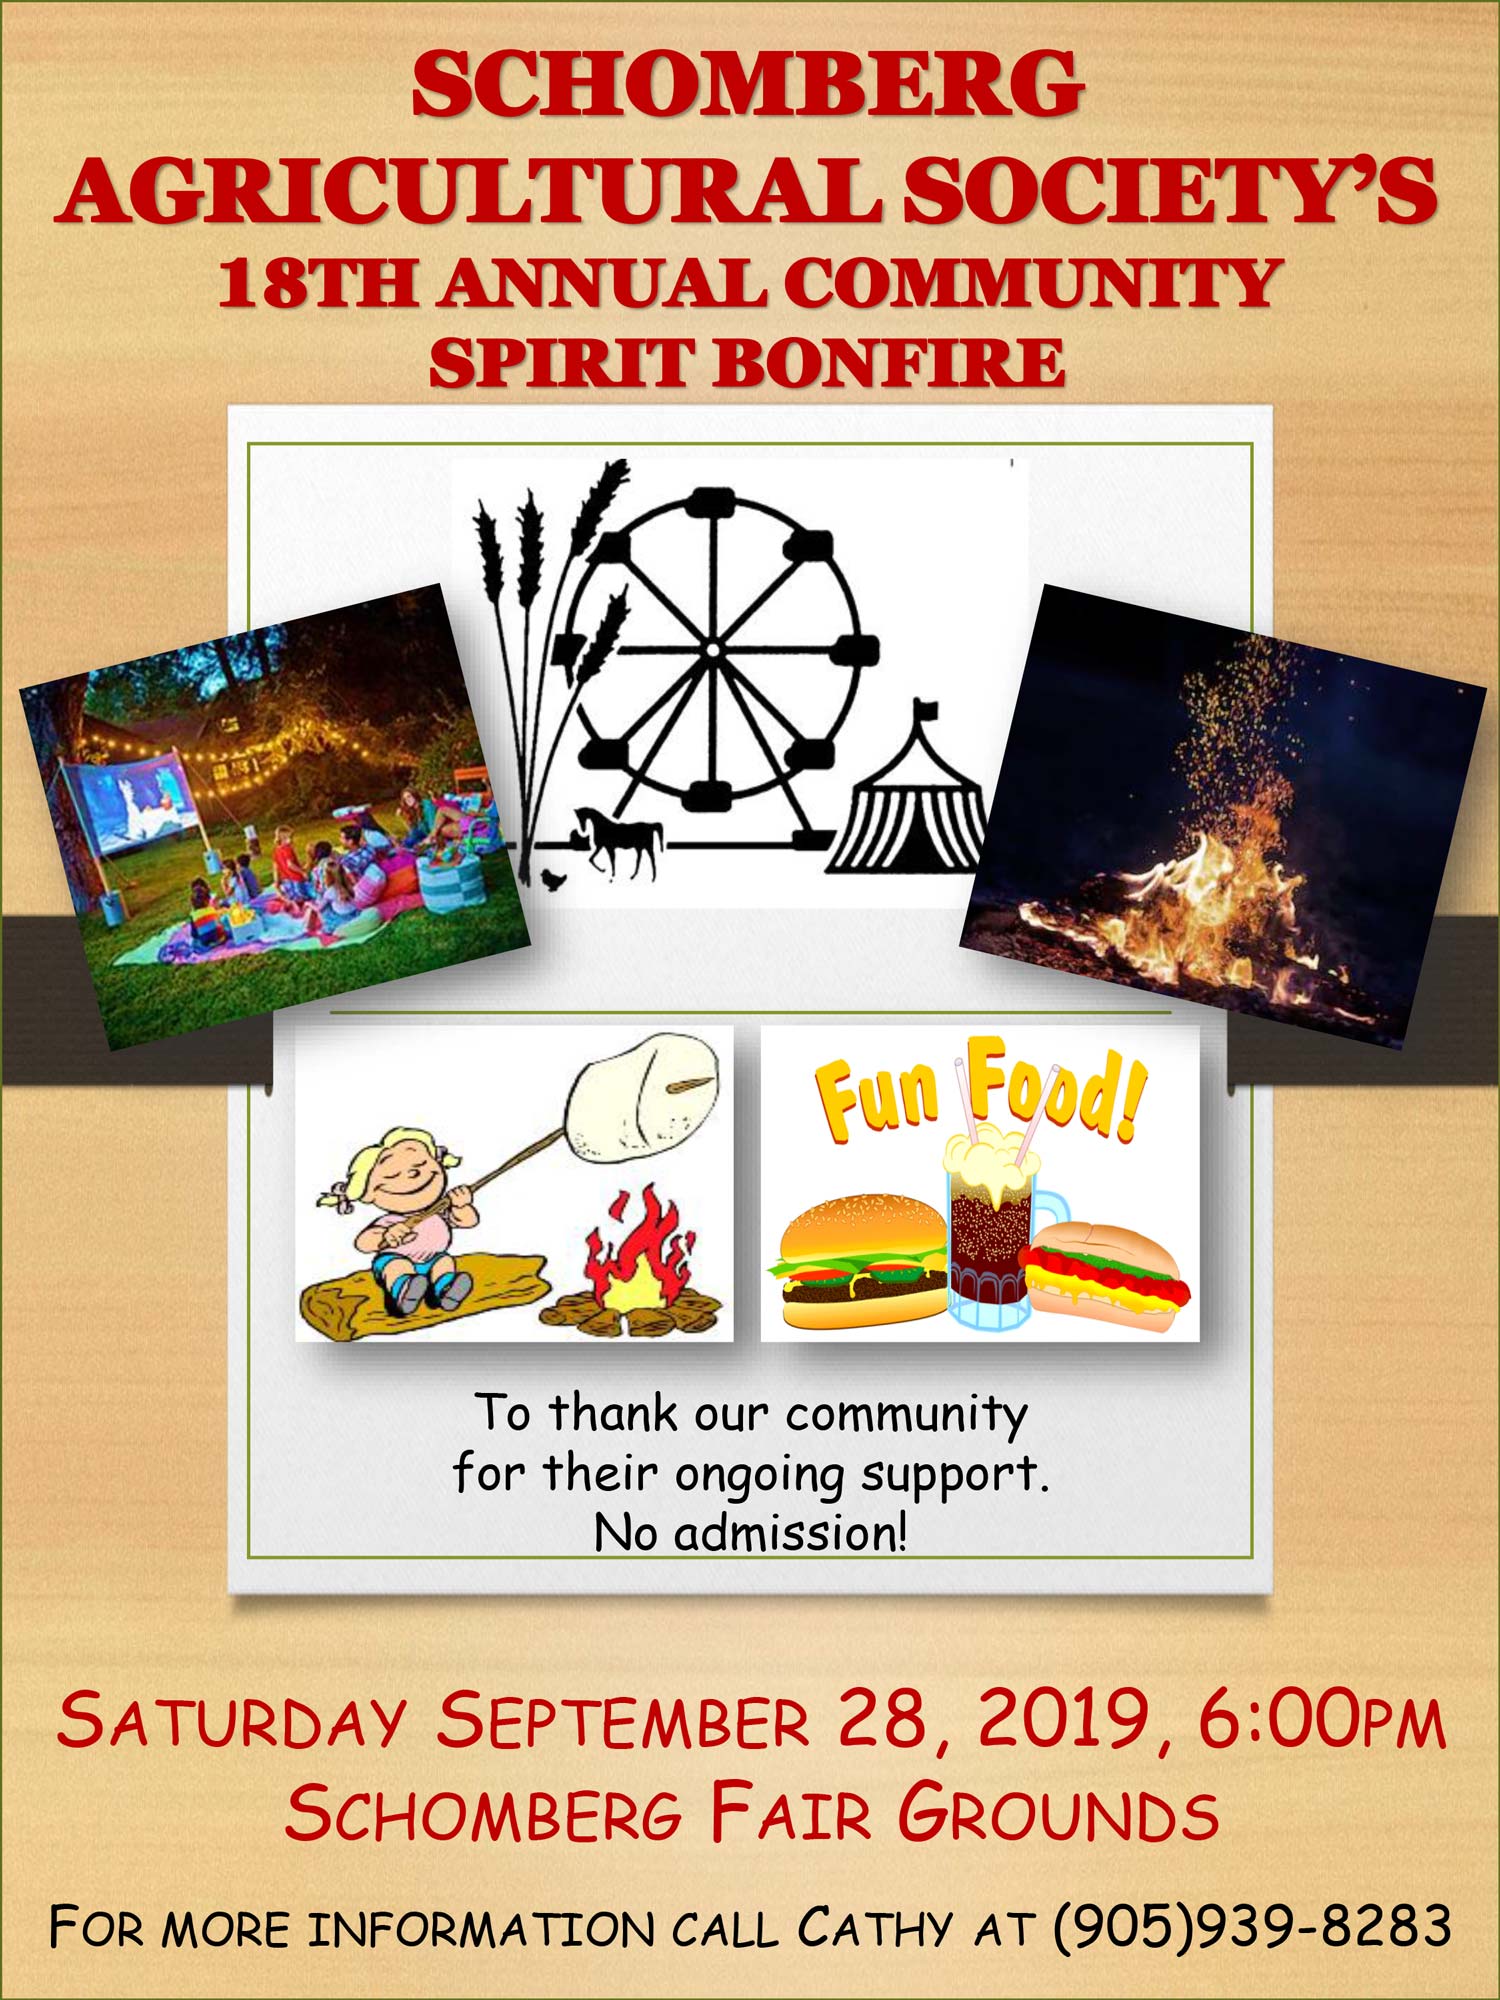 Community bonfire poster 2019 at Schomberg